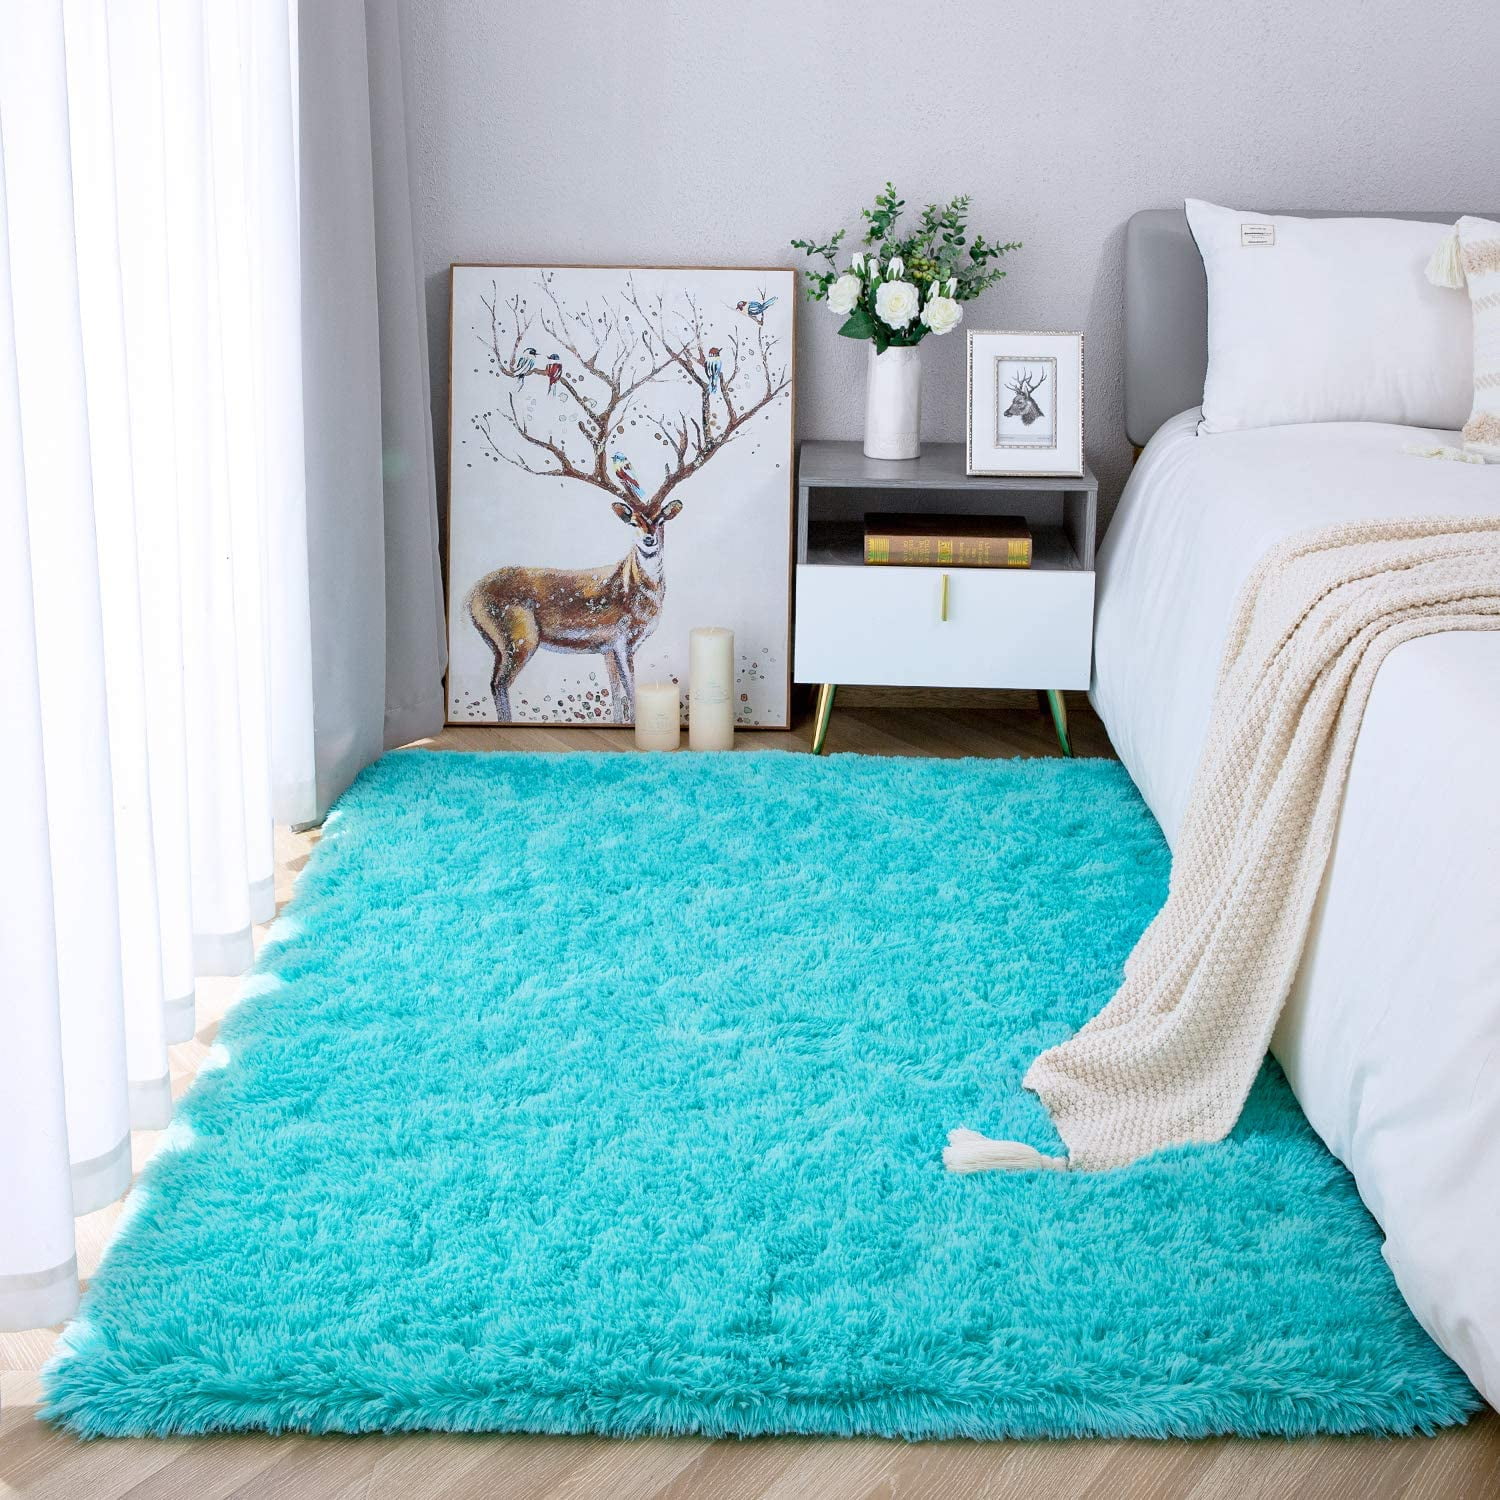 Green Cannabis Leaves Bedroom Carpet Decor Area Rugs Living Room Floor Yoga Mat 